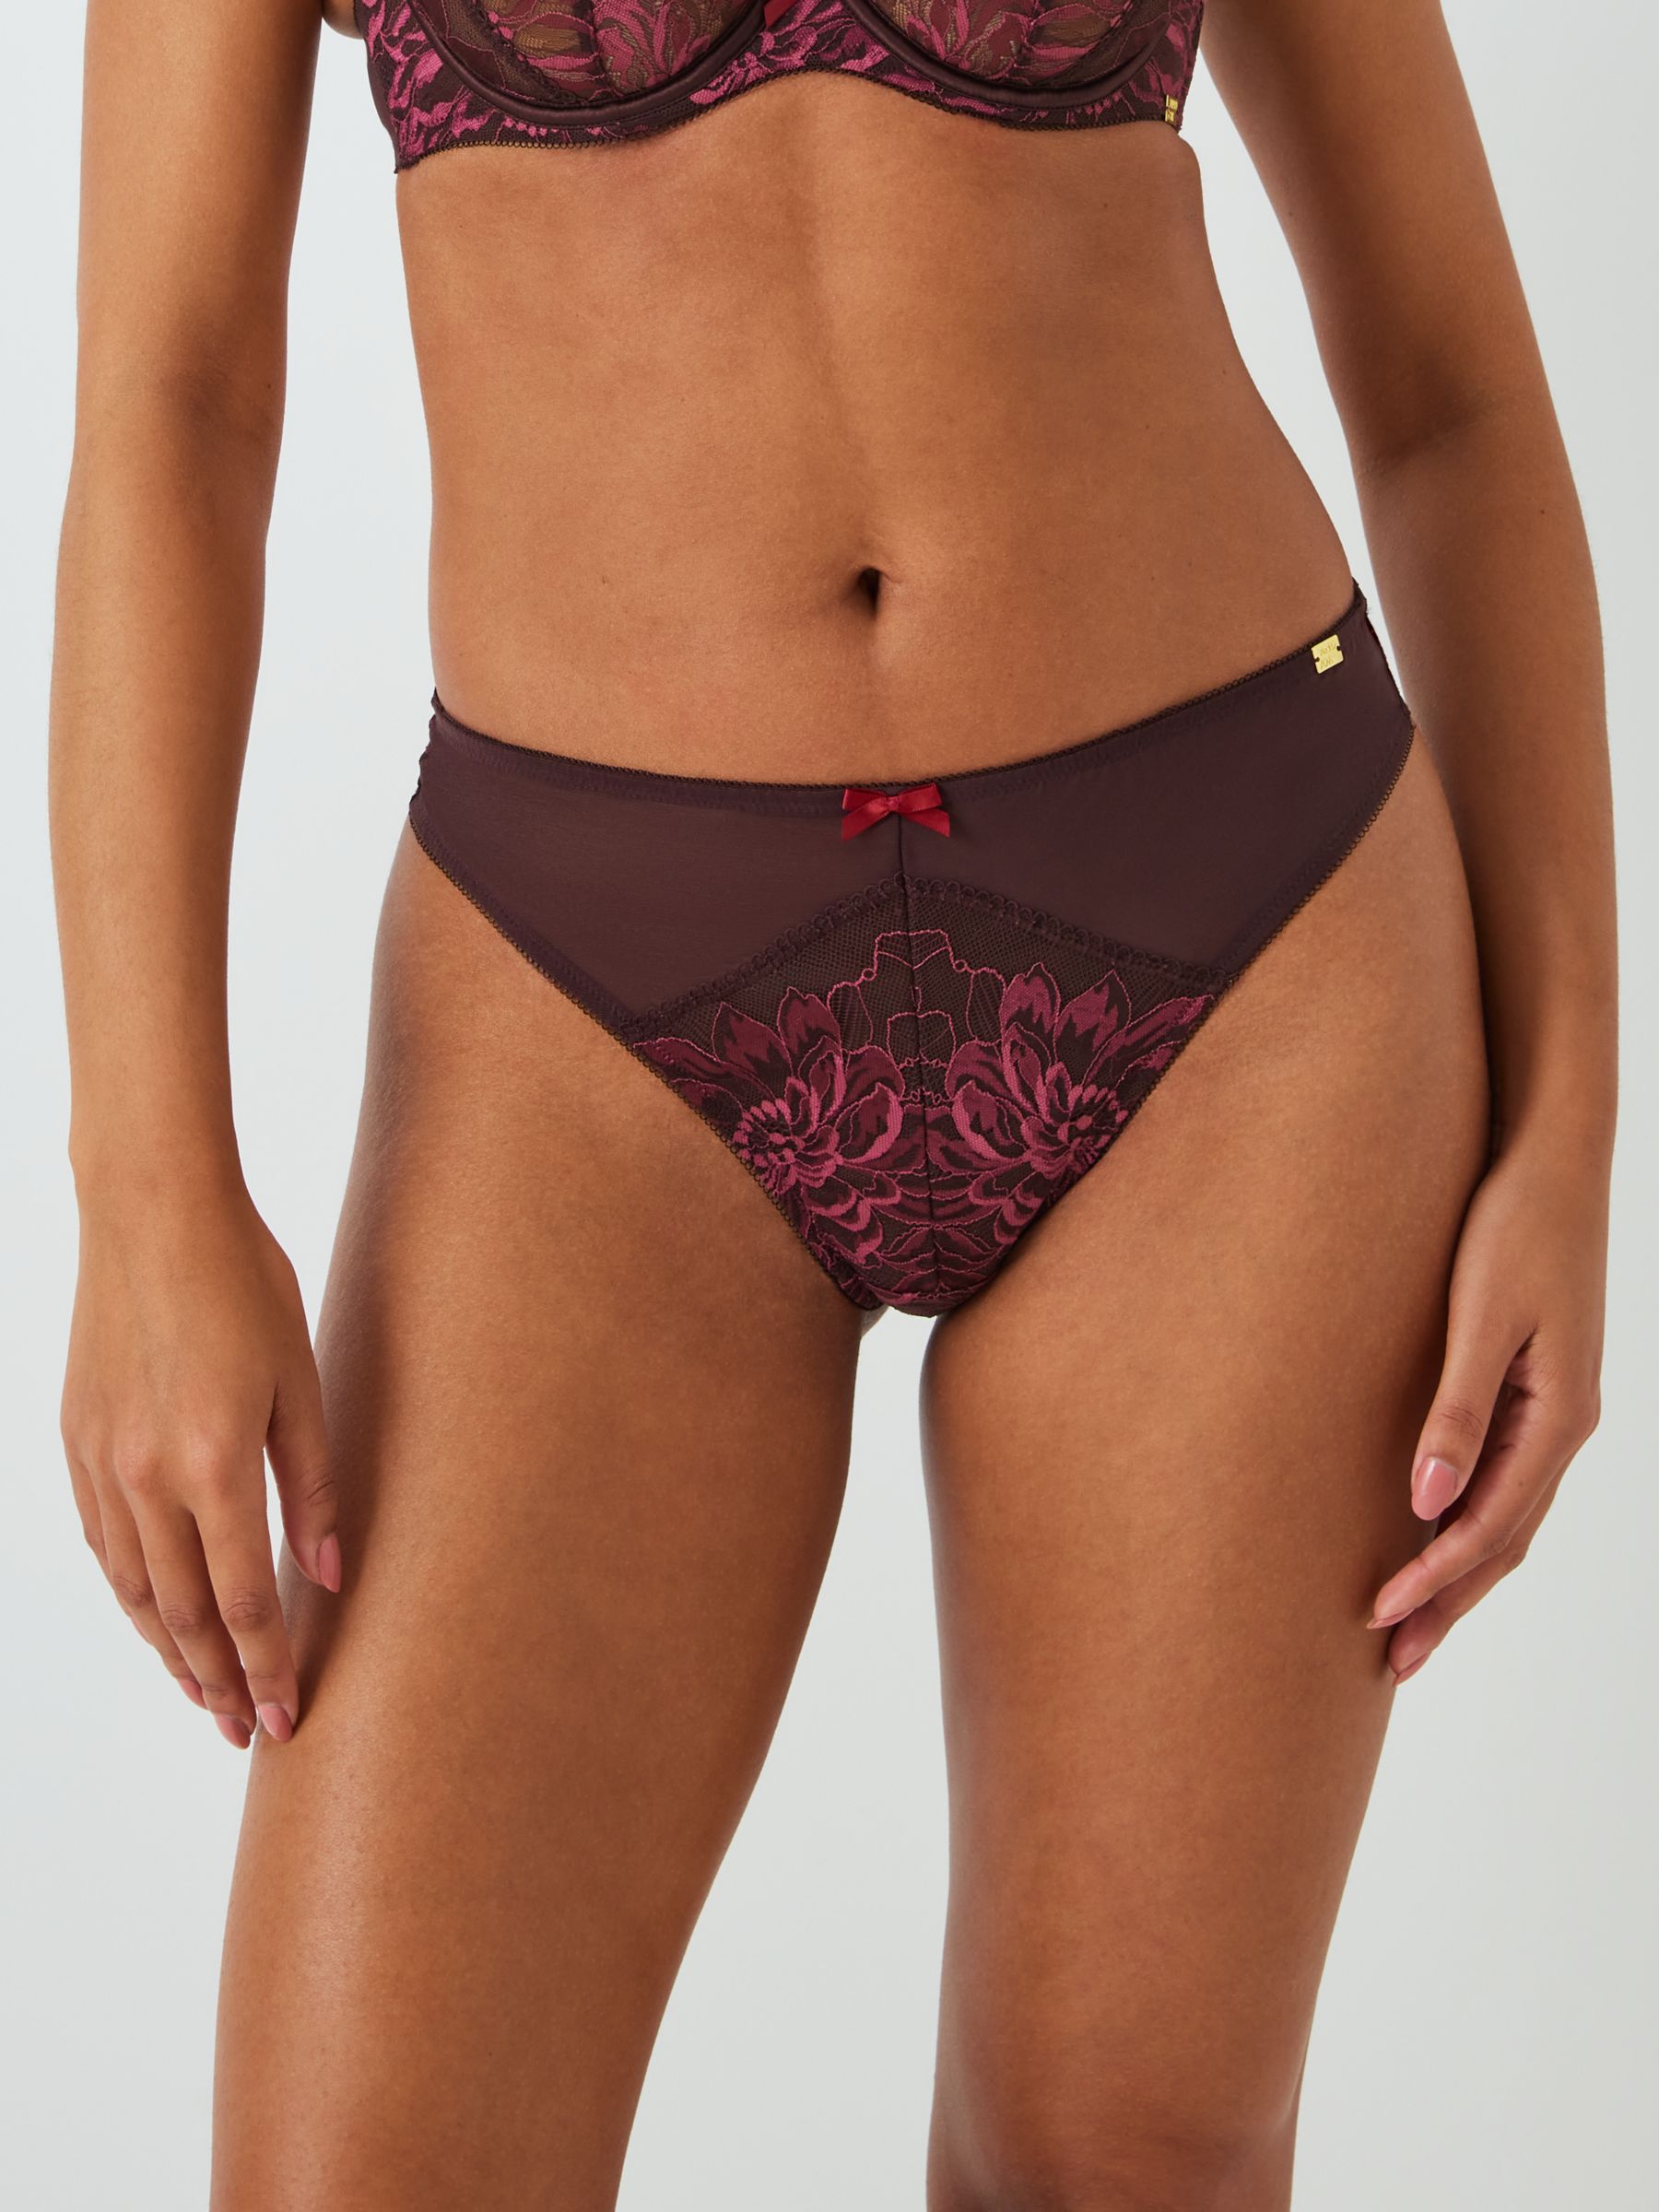 View All Women's Lingerie & Underwear - Brazilian & Tanga